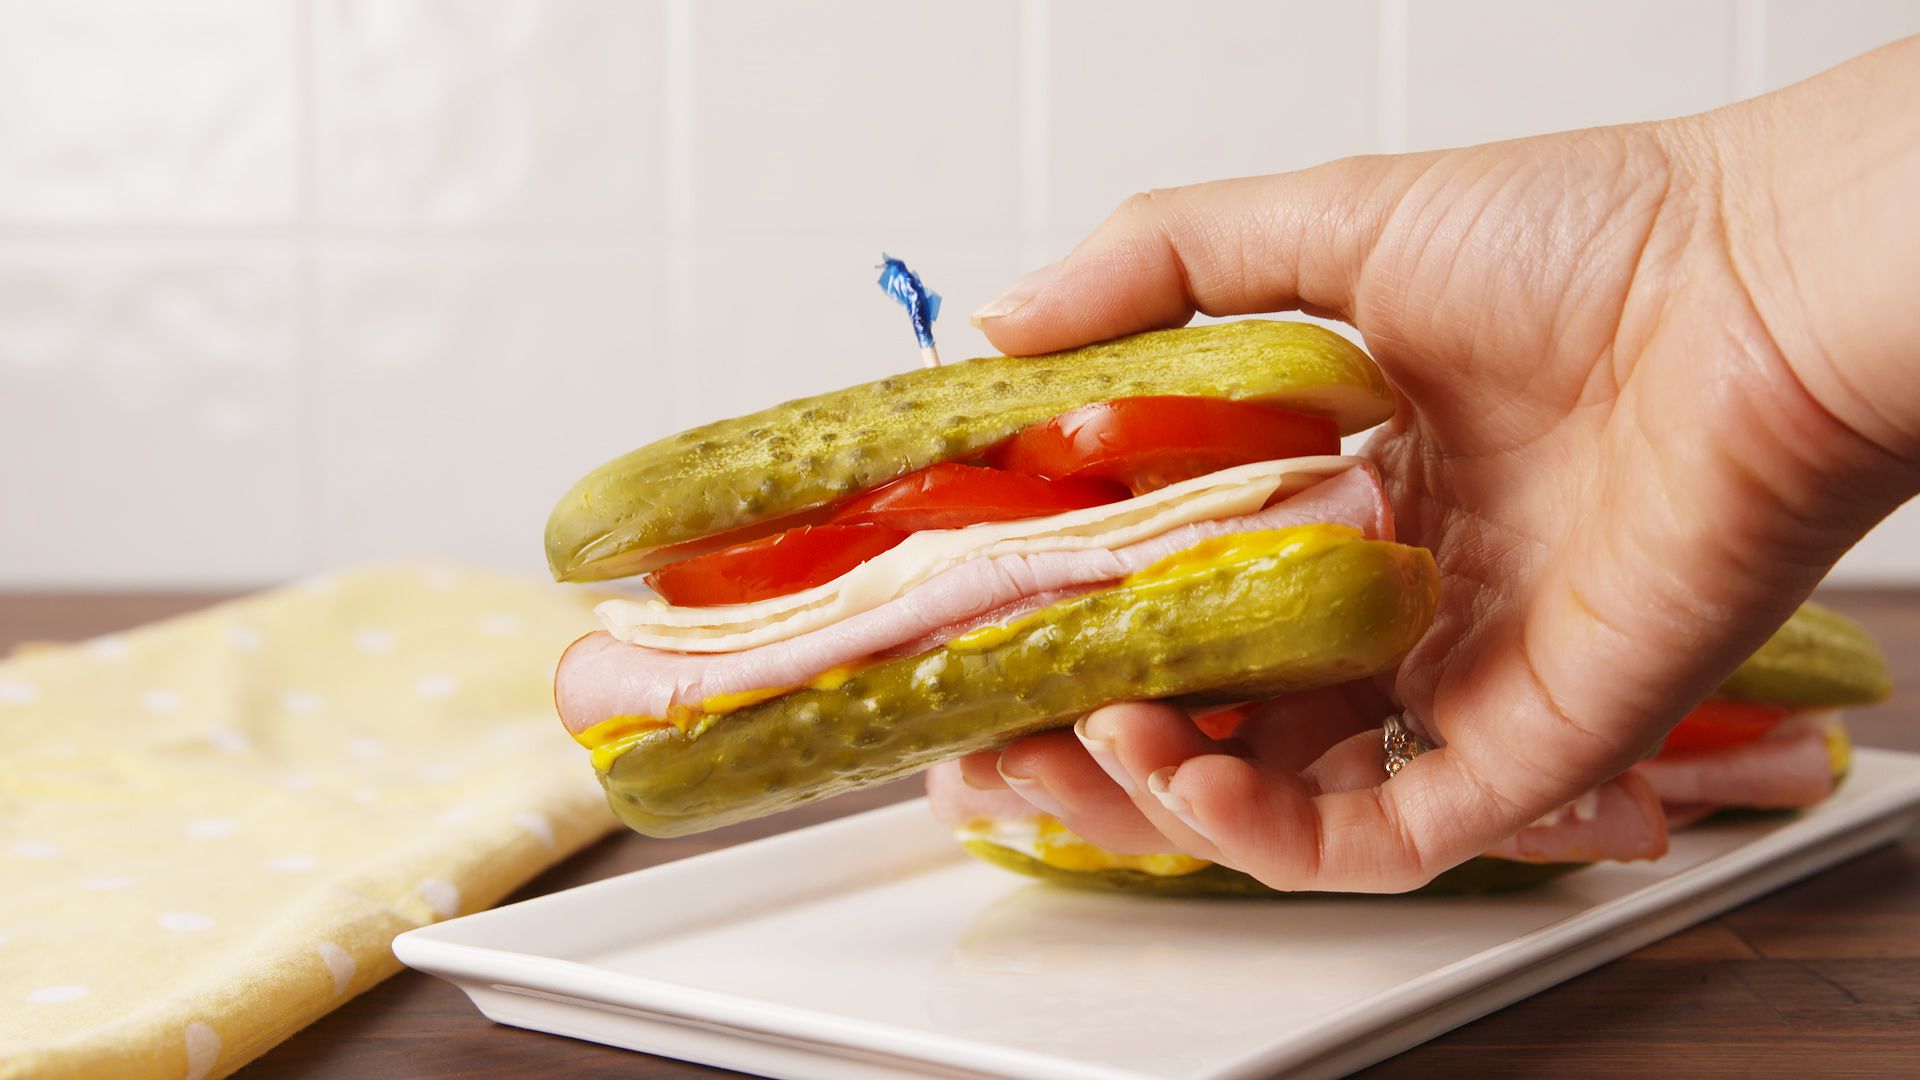 Best Pickle Sub Sandwich Recipe - How to Make a Pickle Sub Sandwich